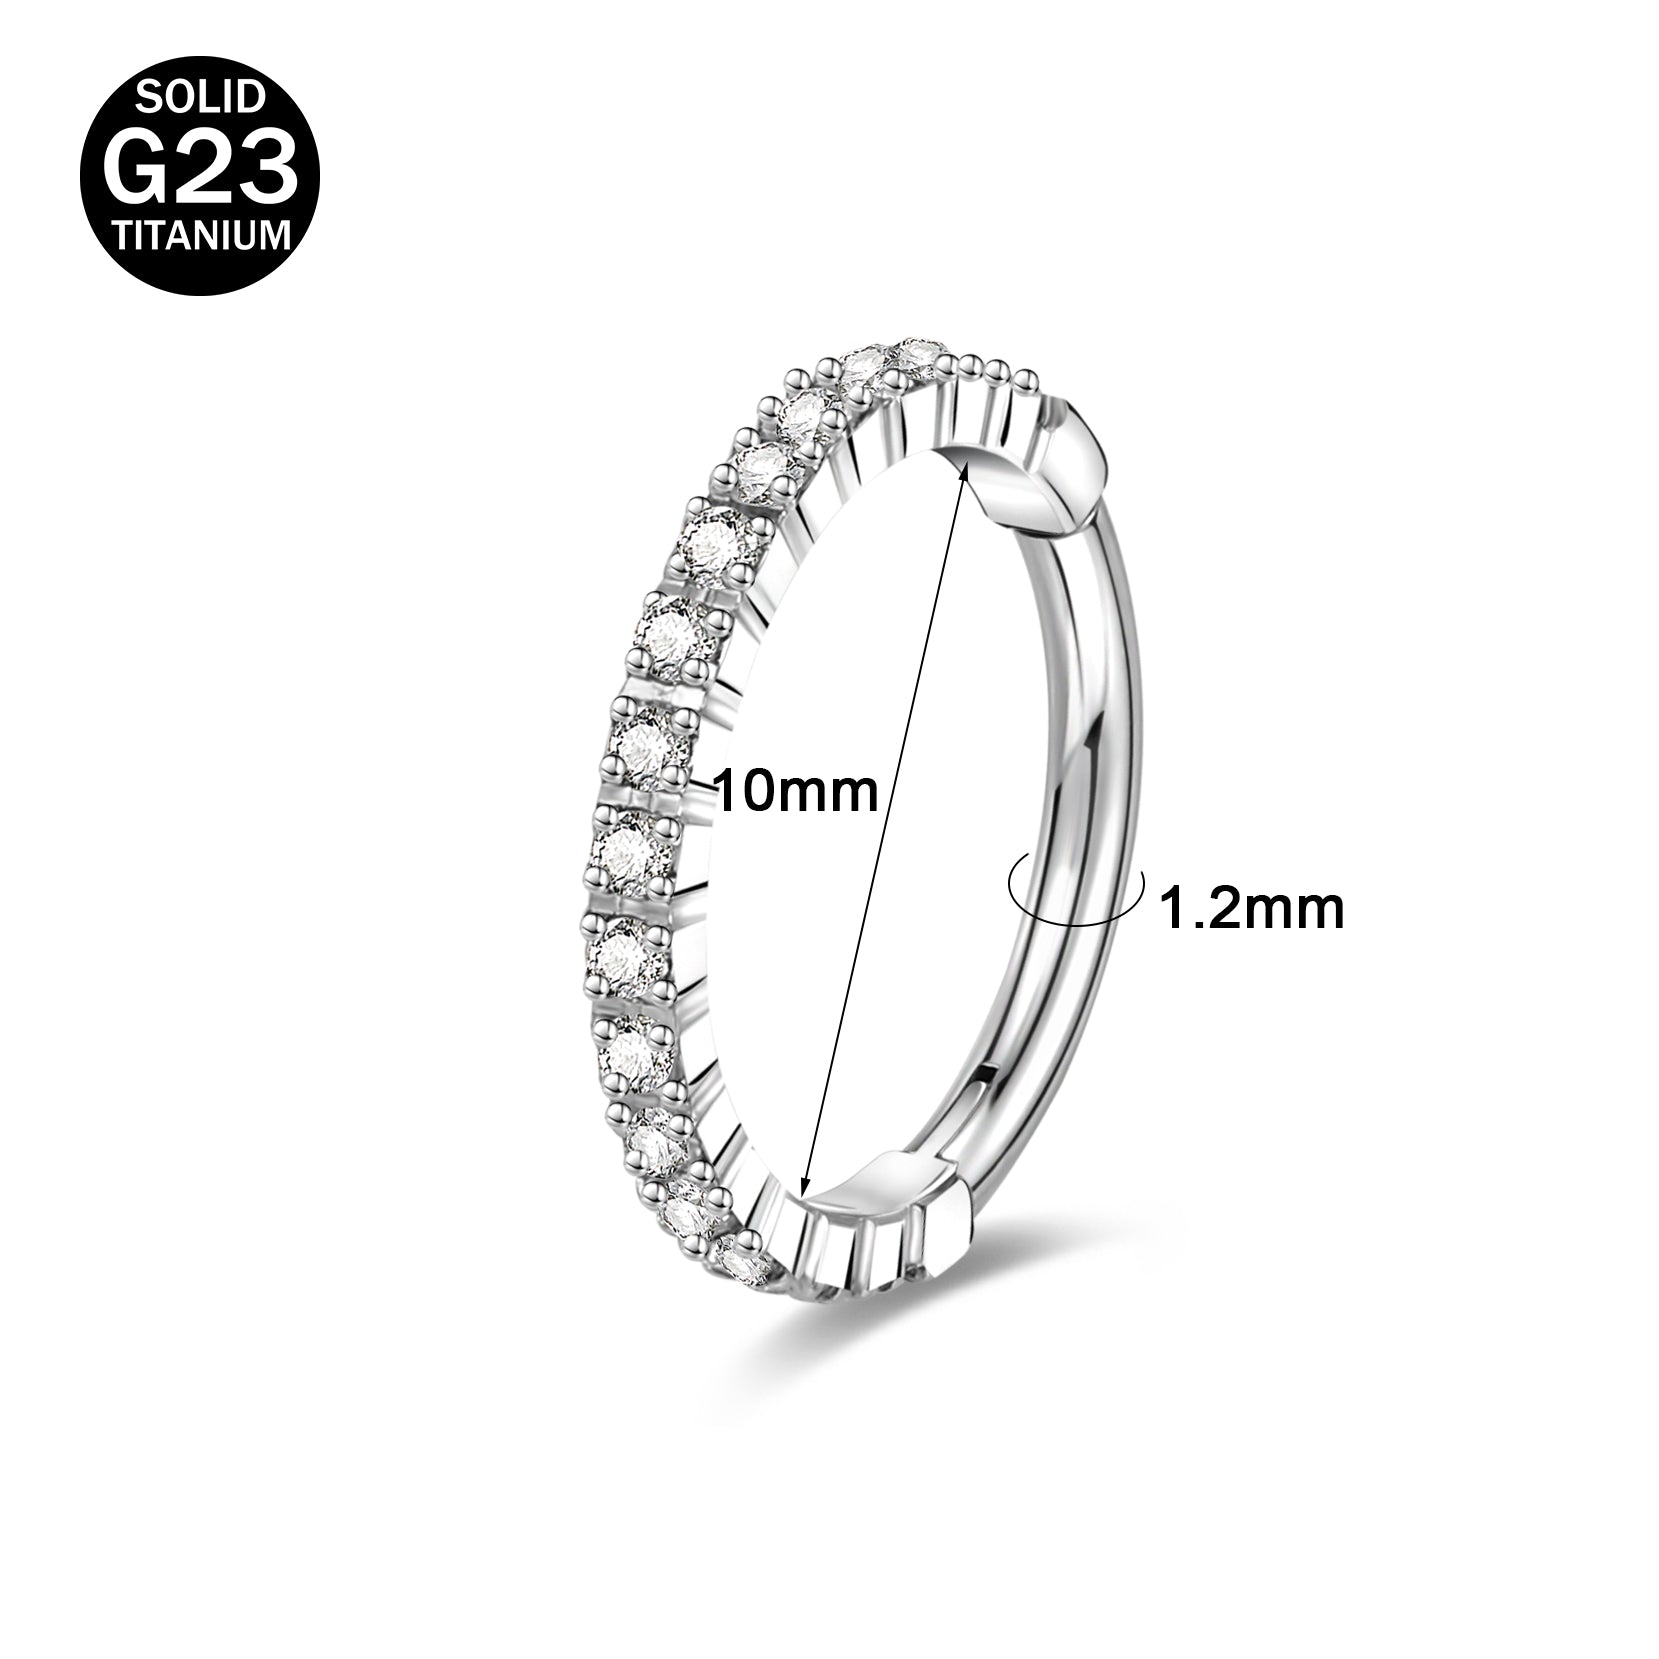 16G G23 Titanium Nose Rings White Zirconal Lip Piercing Cartilage Tragus Conch Helix Earrings